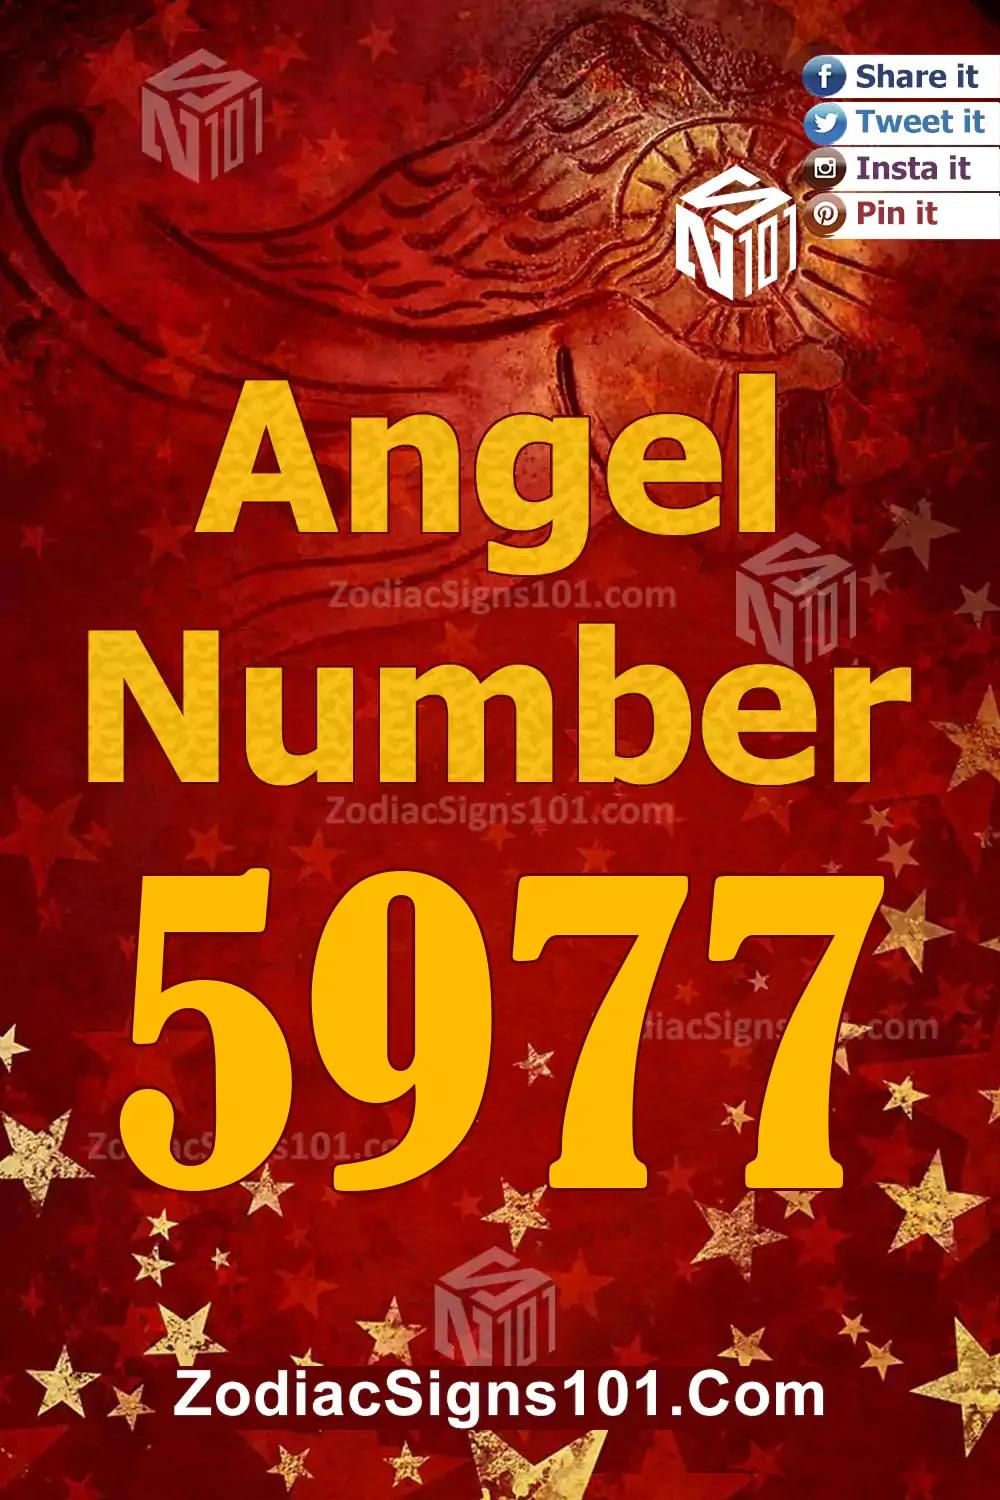 5977-Angel-Number-Meaning.jpg